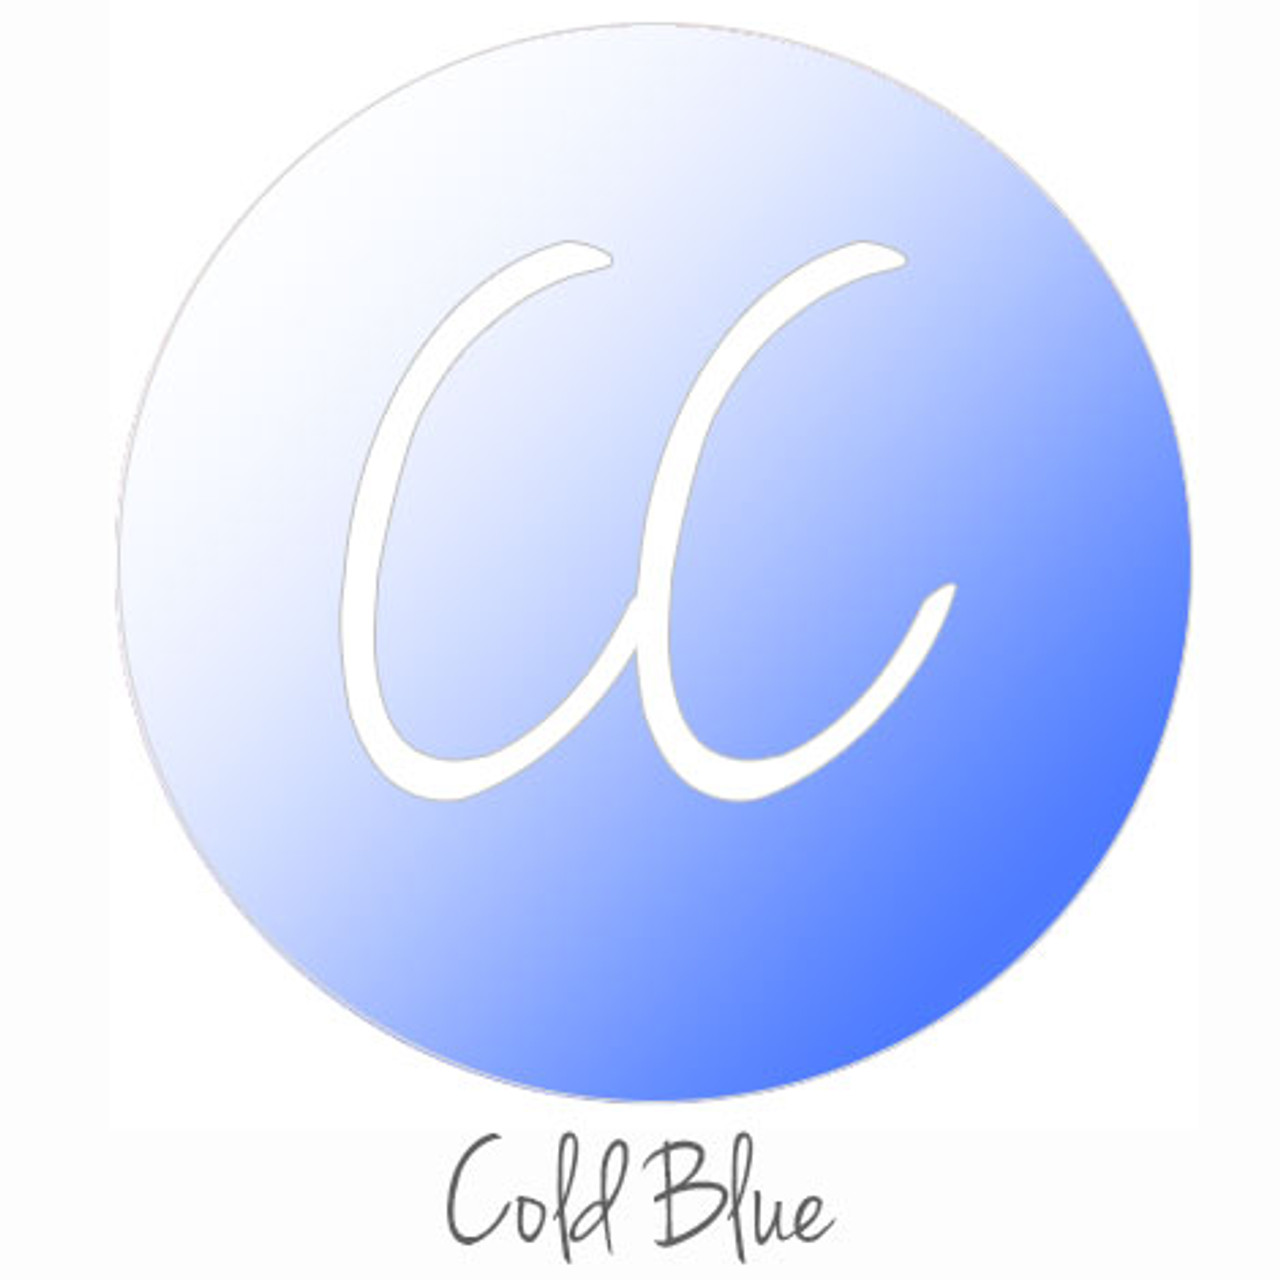 Cold Color Changing Vinyl Roll | Color Change Vinyl 12 x 5 ft Translucent White to Blue